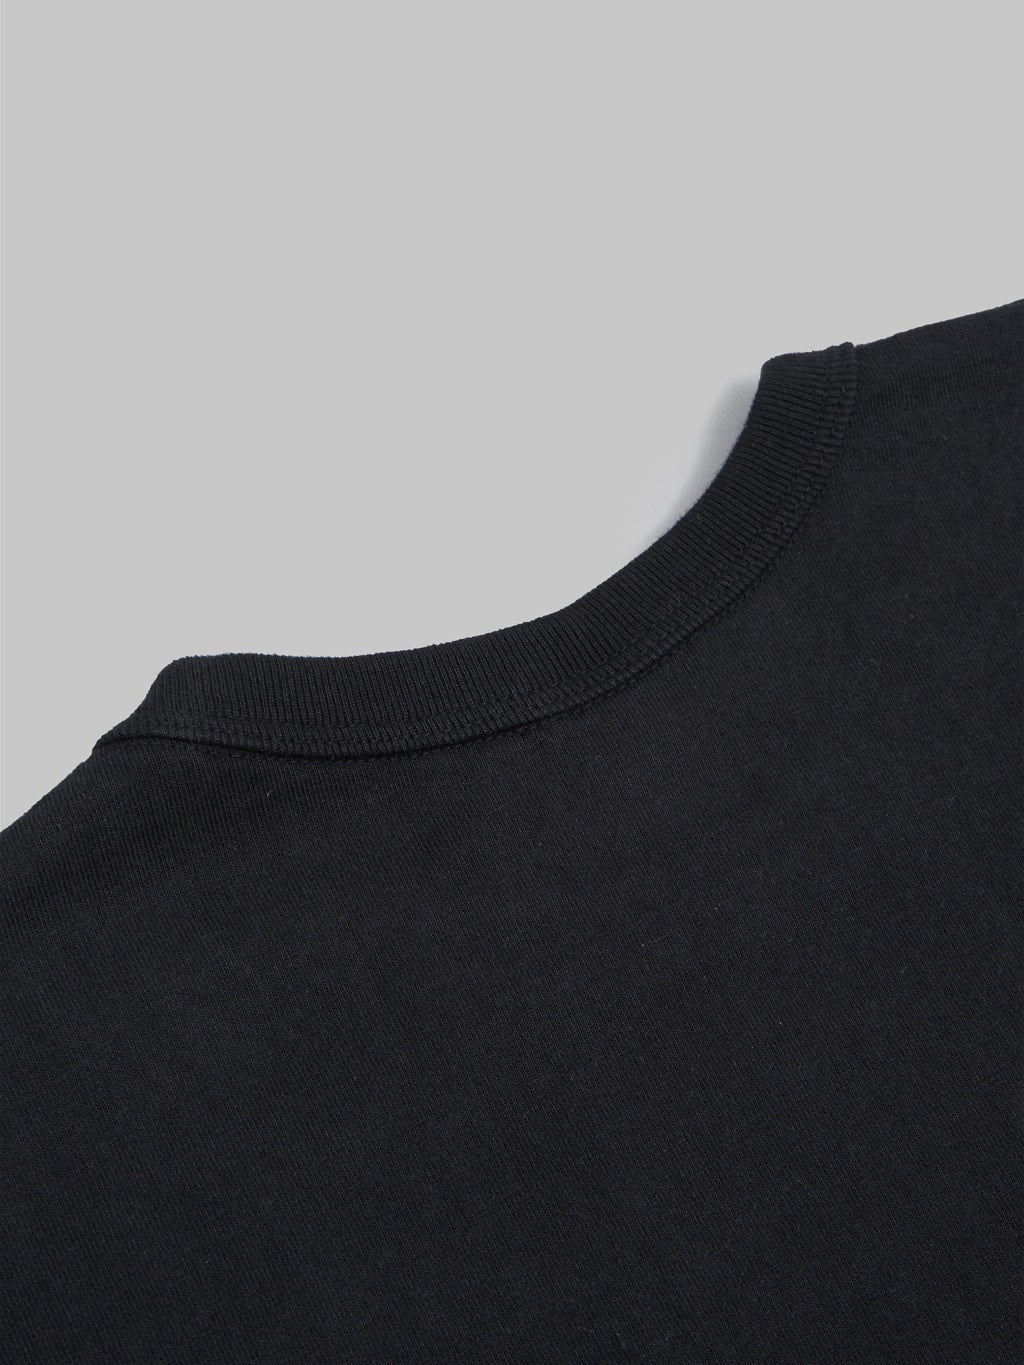 samurai jeans solid plain heavyweight tshirt black back collar